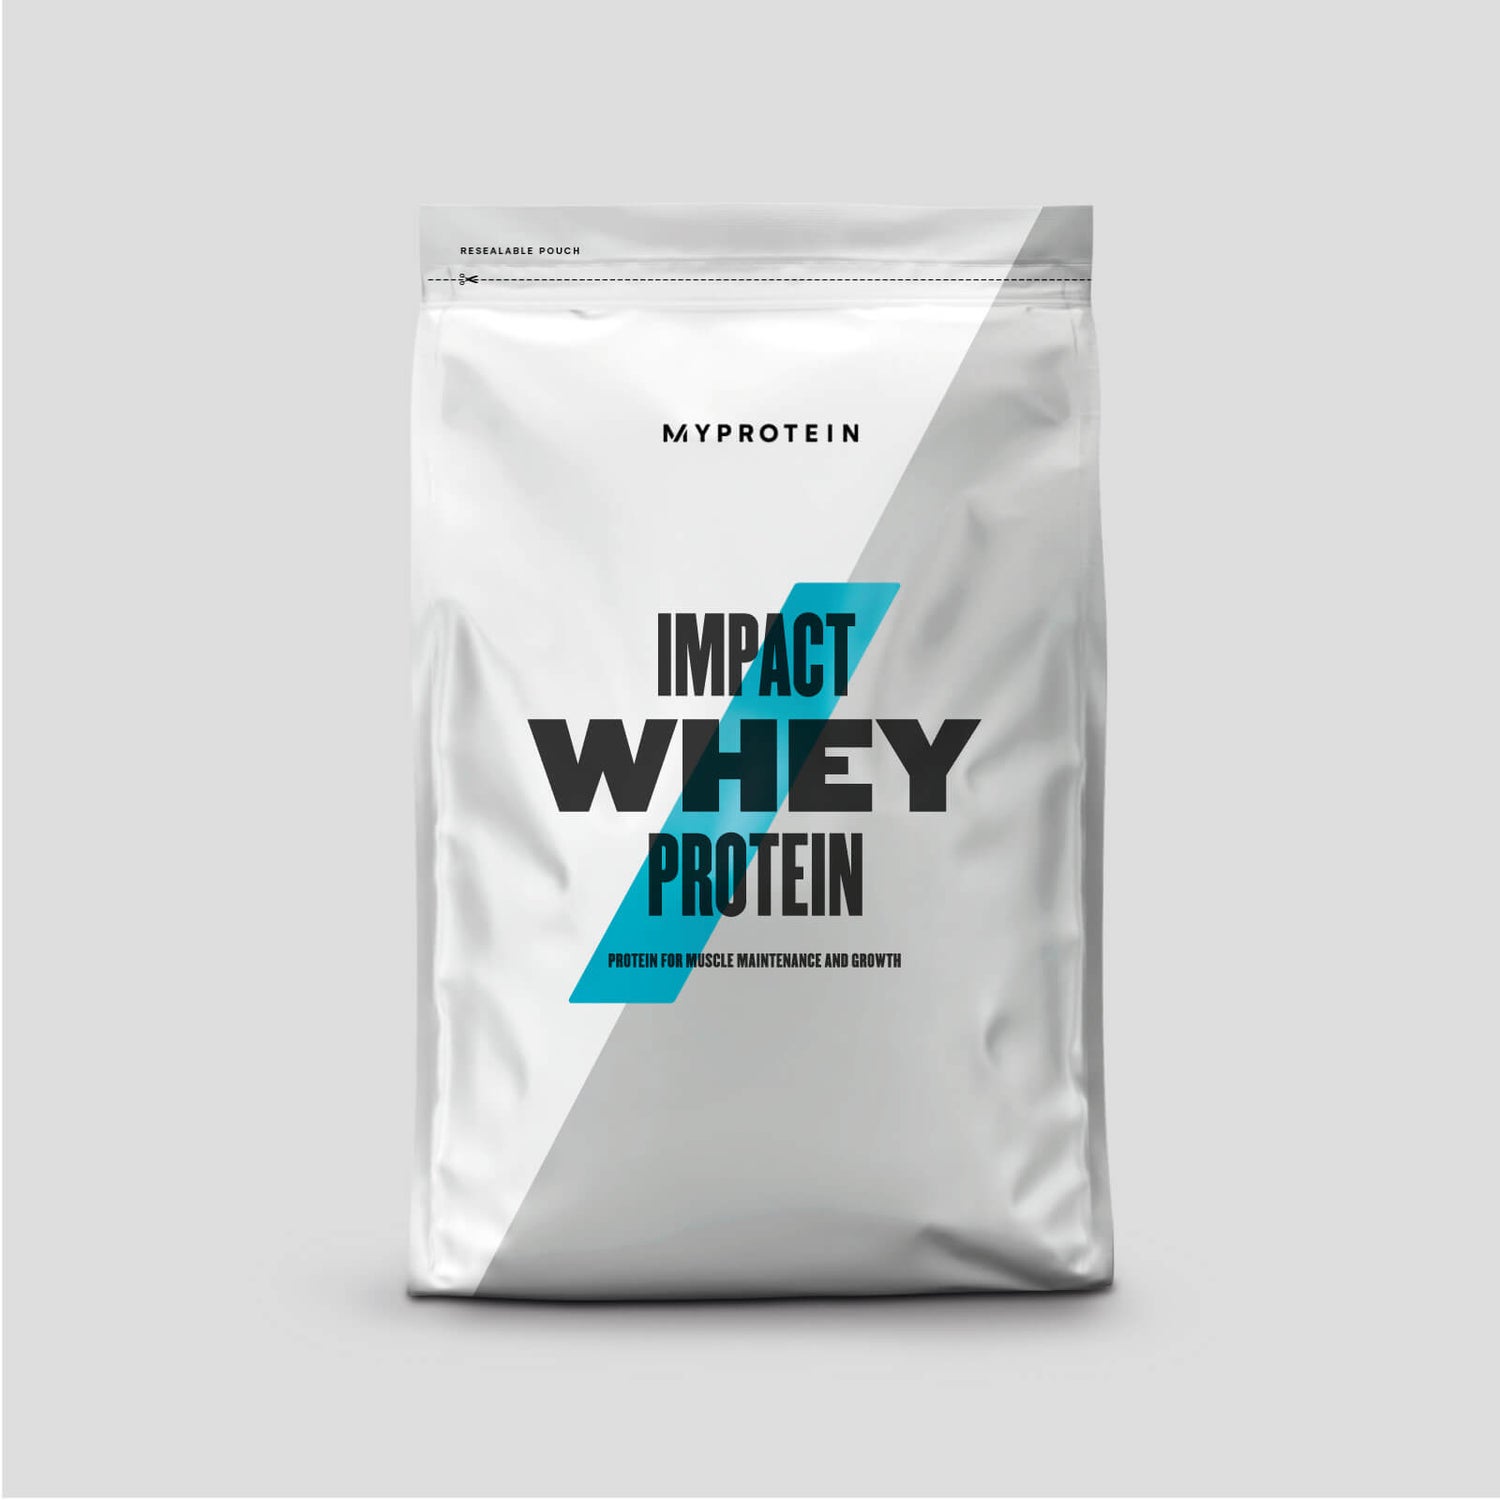 Сывороточный протеин (Impact Whey Protein) - 250g - Cereal Milk